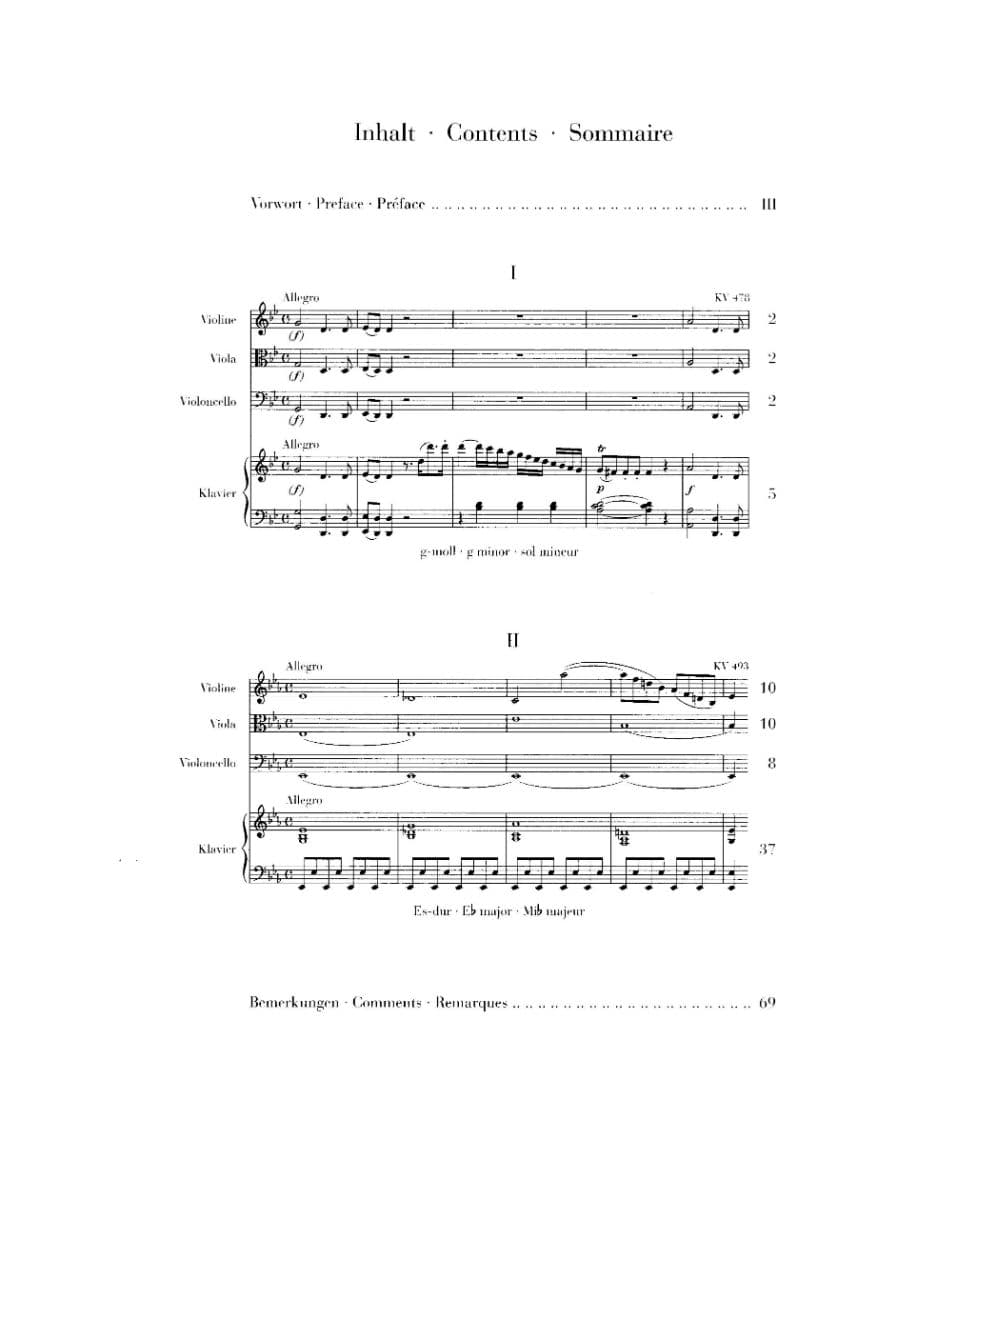 Mozart, WA - Piano Quartets, K 478 and 493 - Violin, Viola, Cello, and Piano - edited by Ernst Herttrich - G Henle Verlag URTEXT